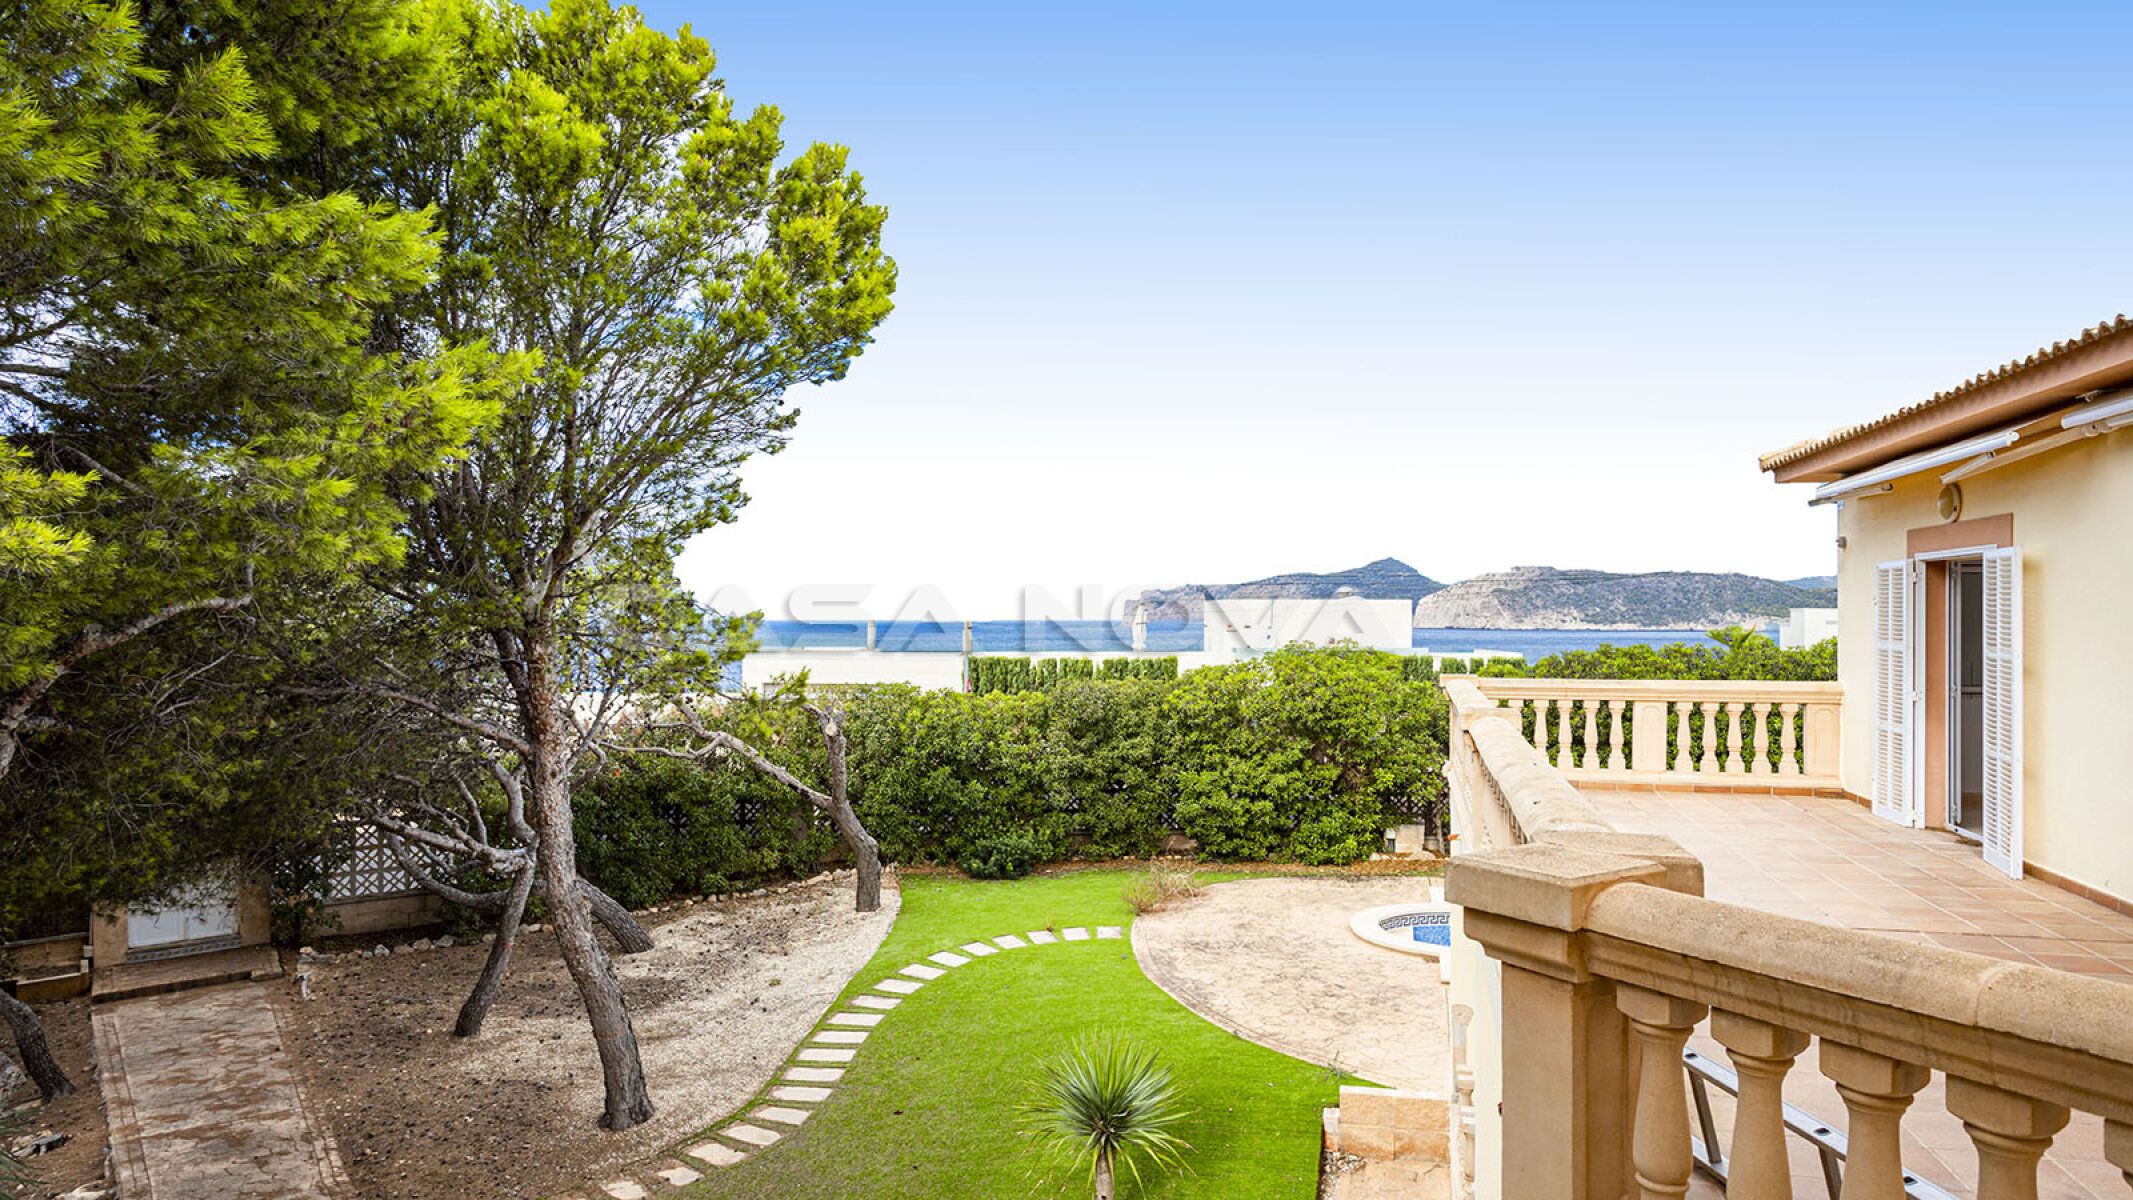 Mediterr�neo Mallorca Chalet en la mejor ubicaci�n